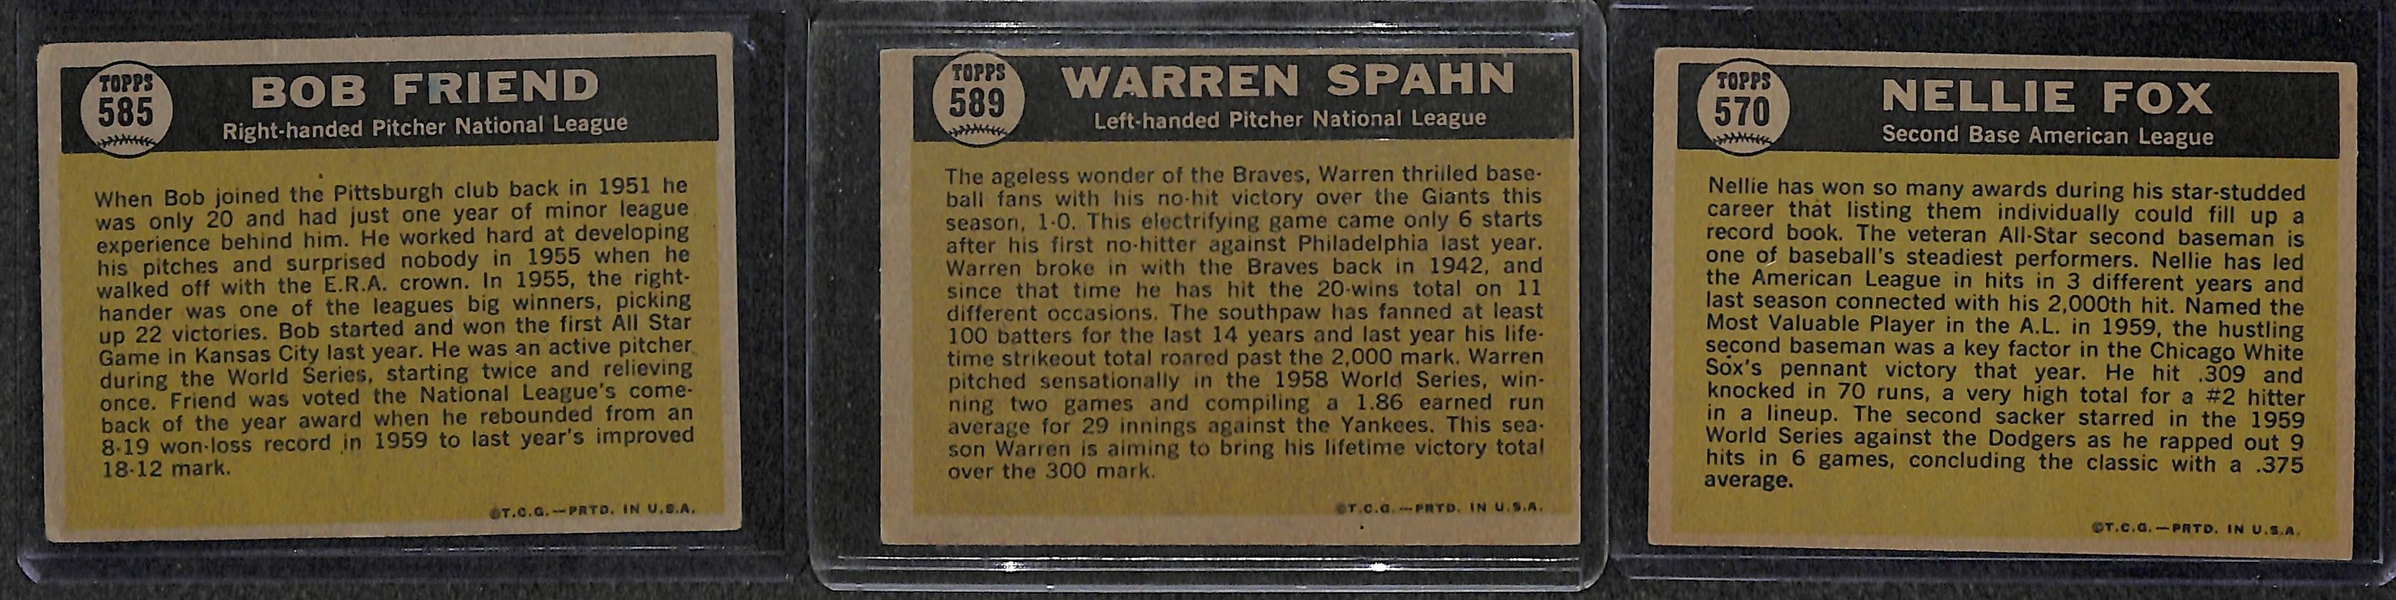 1961 Topps Baseball Near Complete Set - Includes 542 of 589 Cards - w. Hank Aaron & Carl Yastrzemski